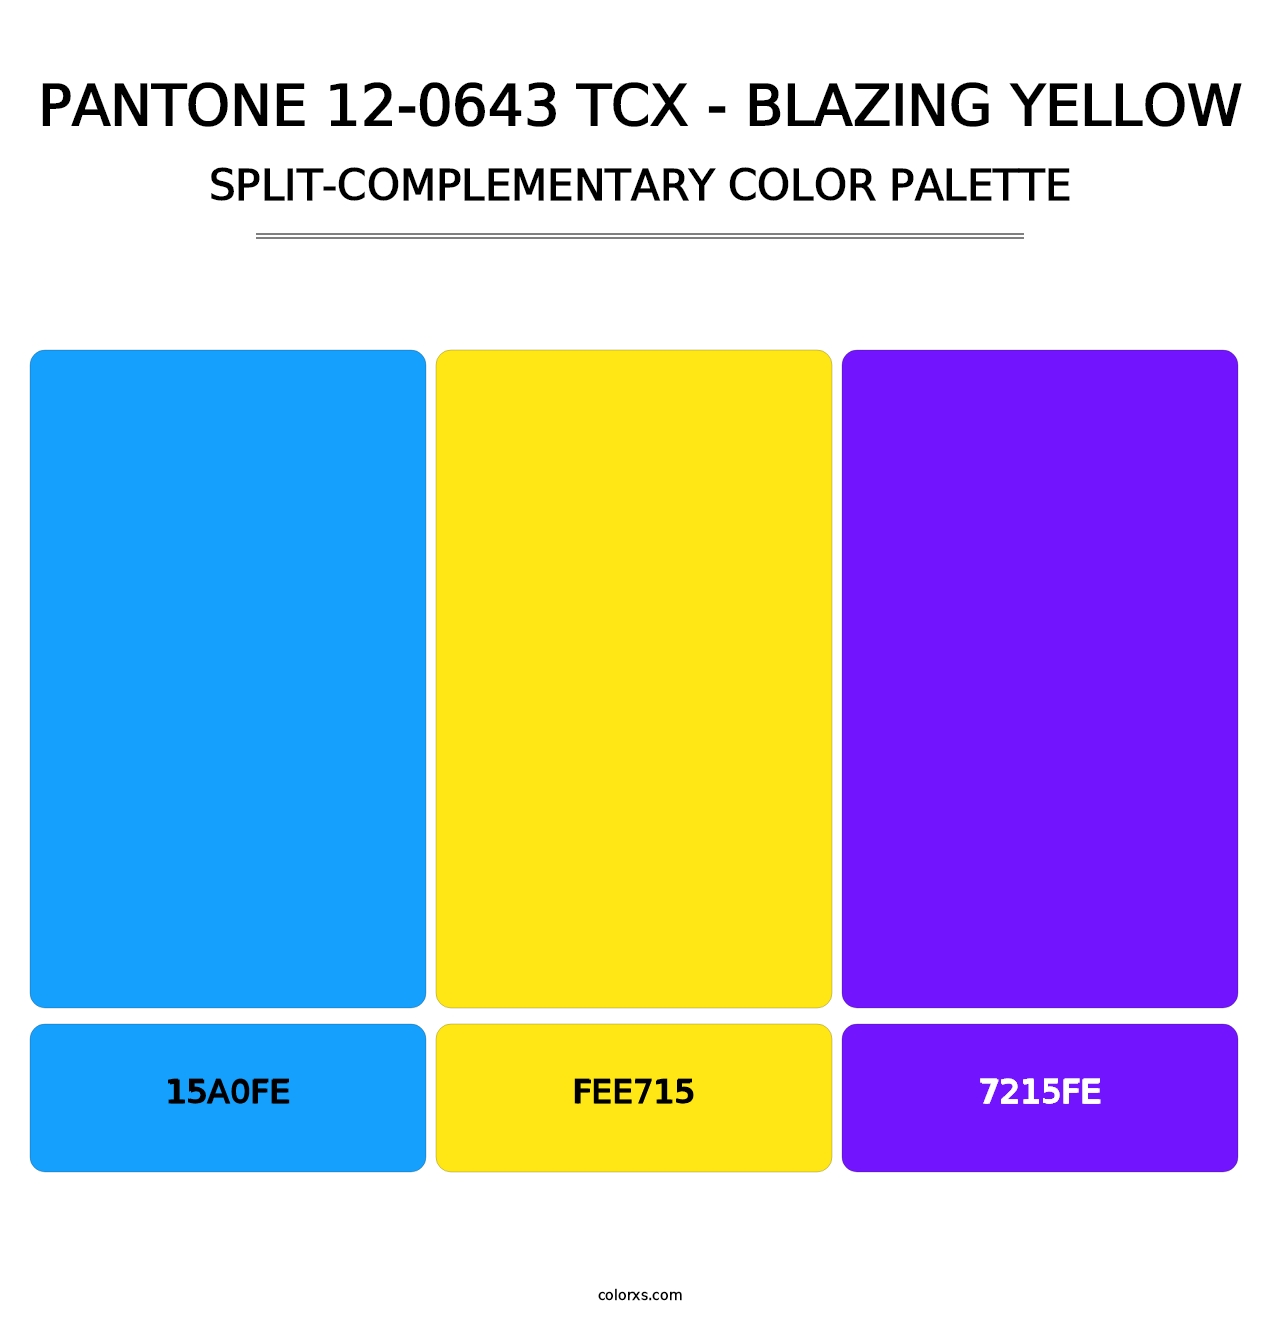 PANTONE 12-0643 TCX - Blazing Yellow - Split-Complementary Color Palette